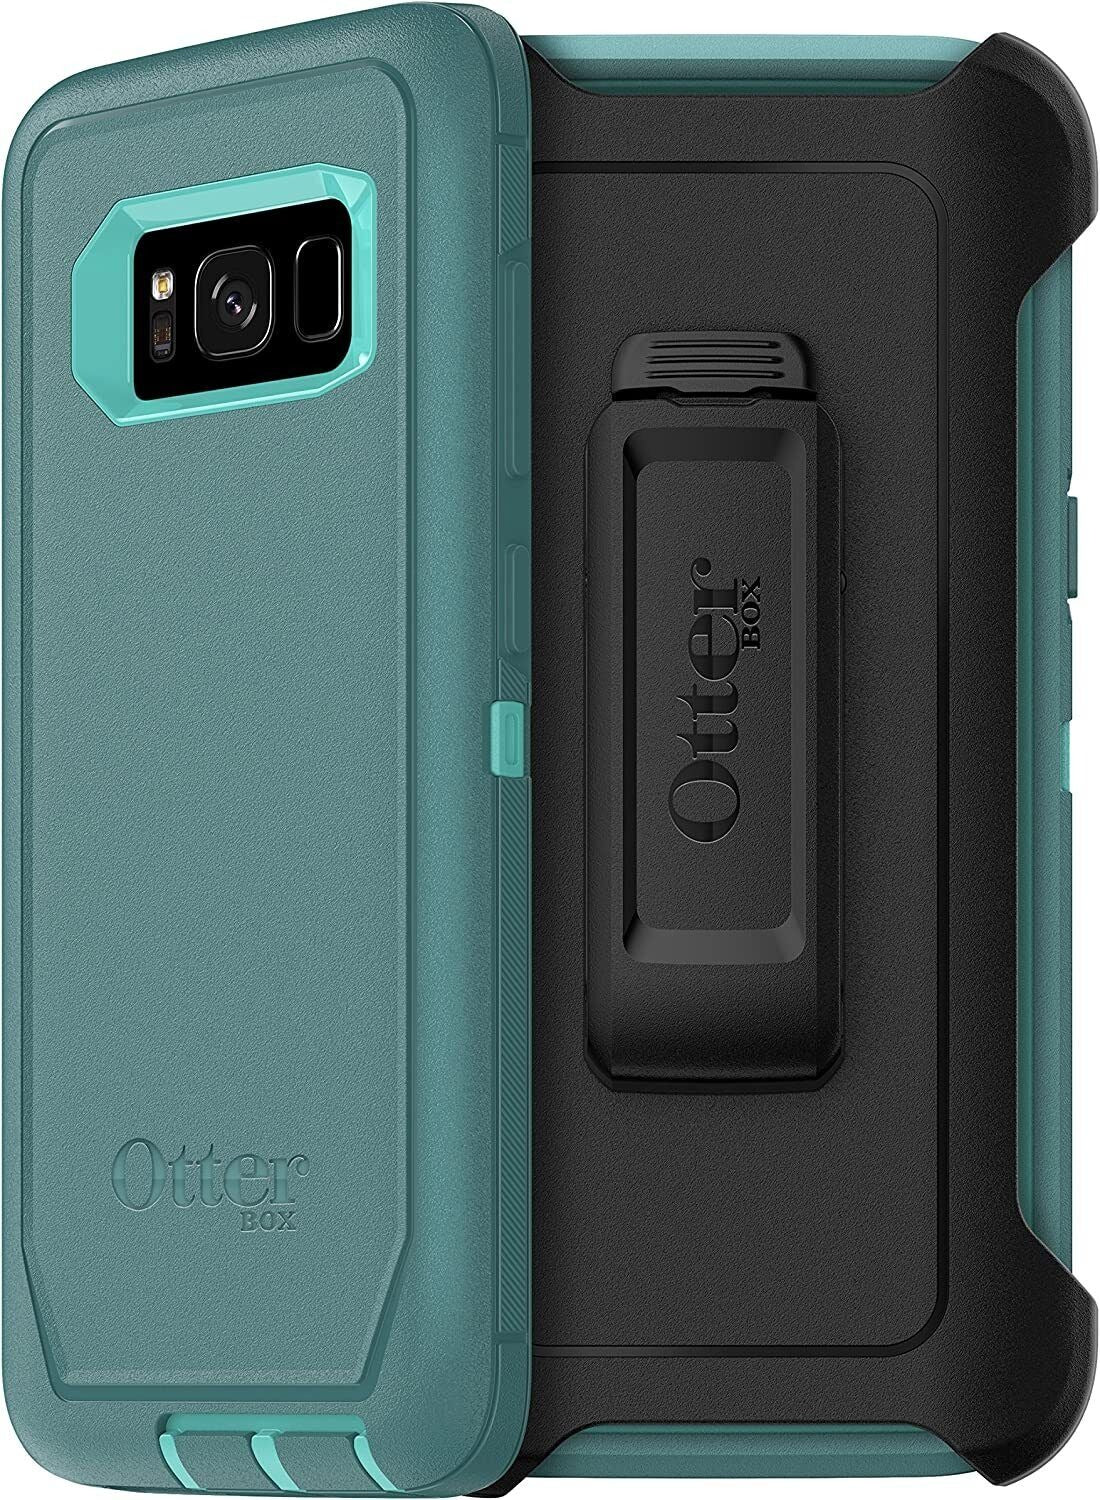 OtterBox DEFENDER SERIES Case for Samsung Galaxy S8+ - Aqua Mint (New)